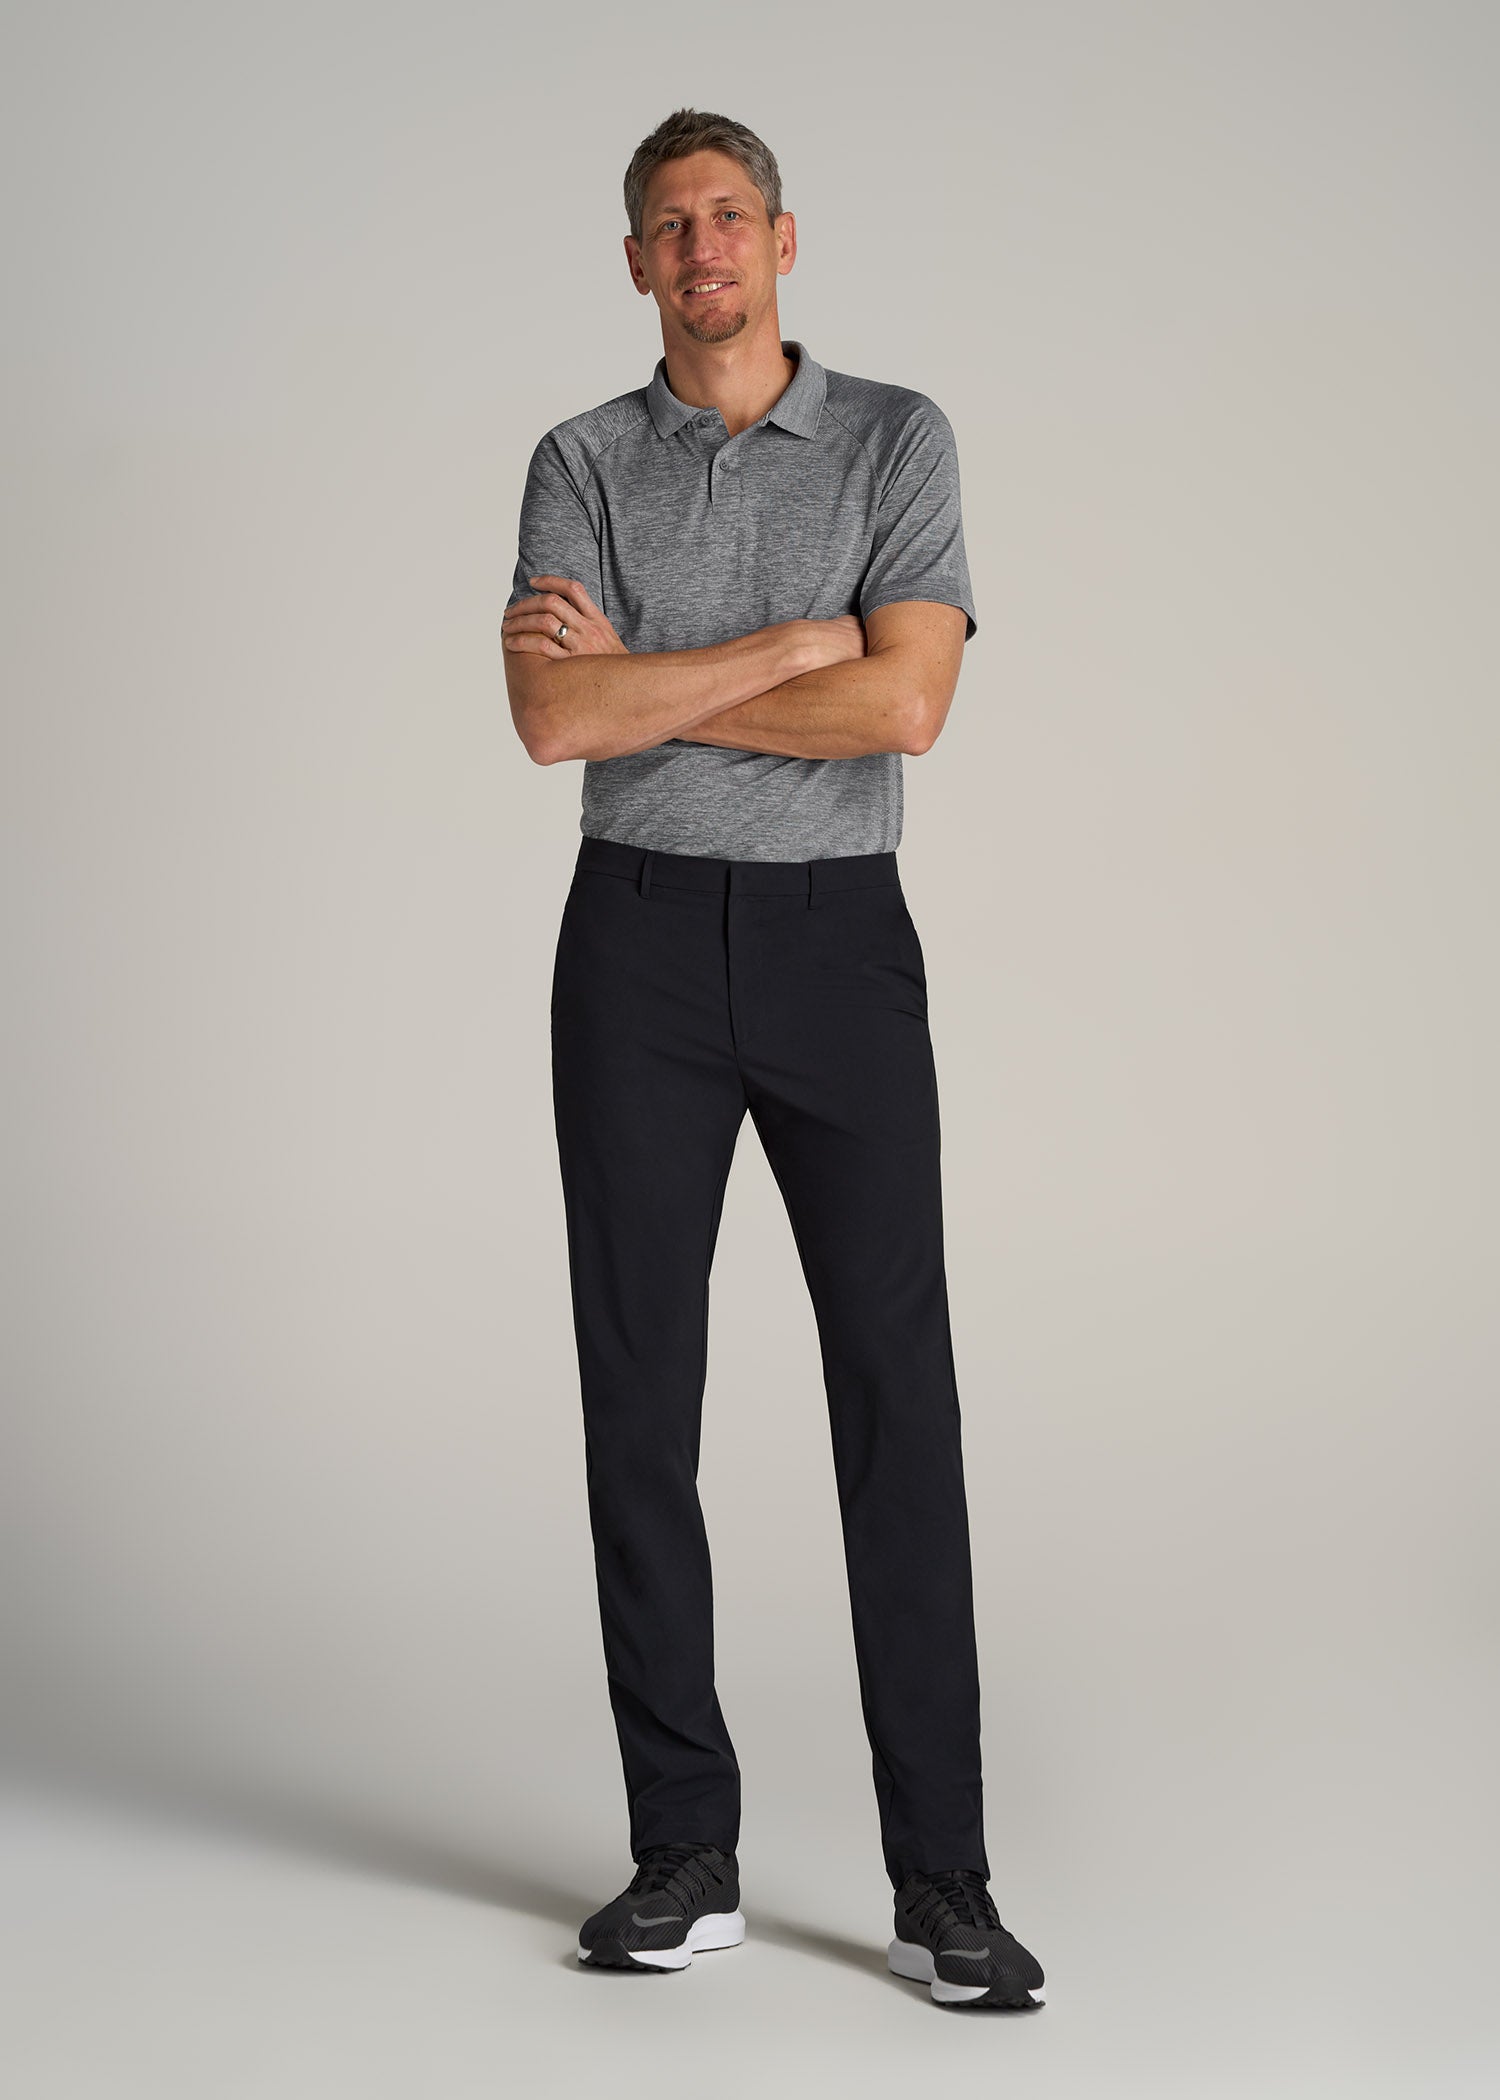 Men's Tall Performance Casual Pants Black